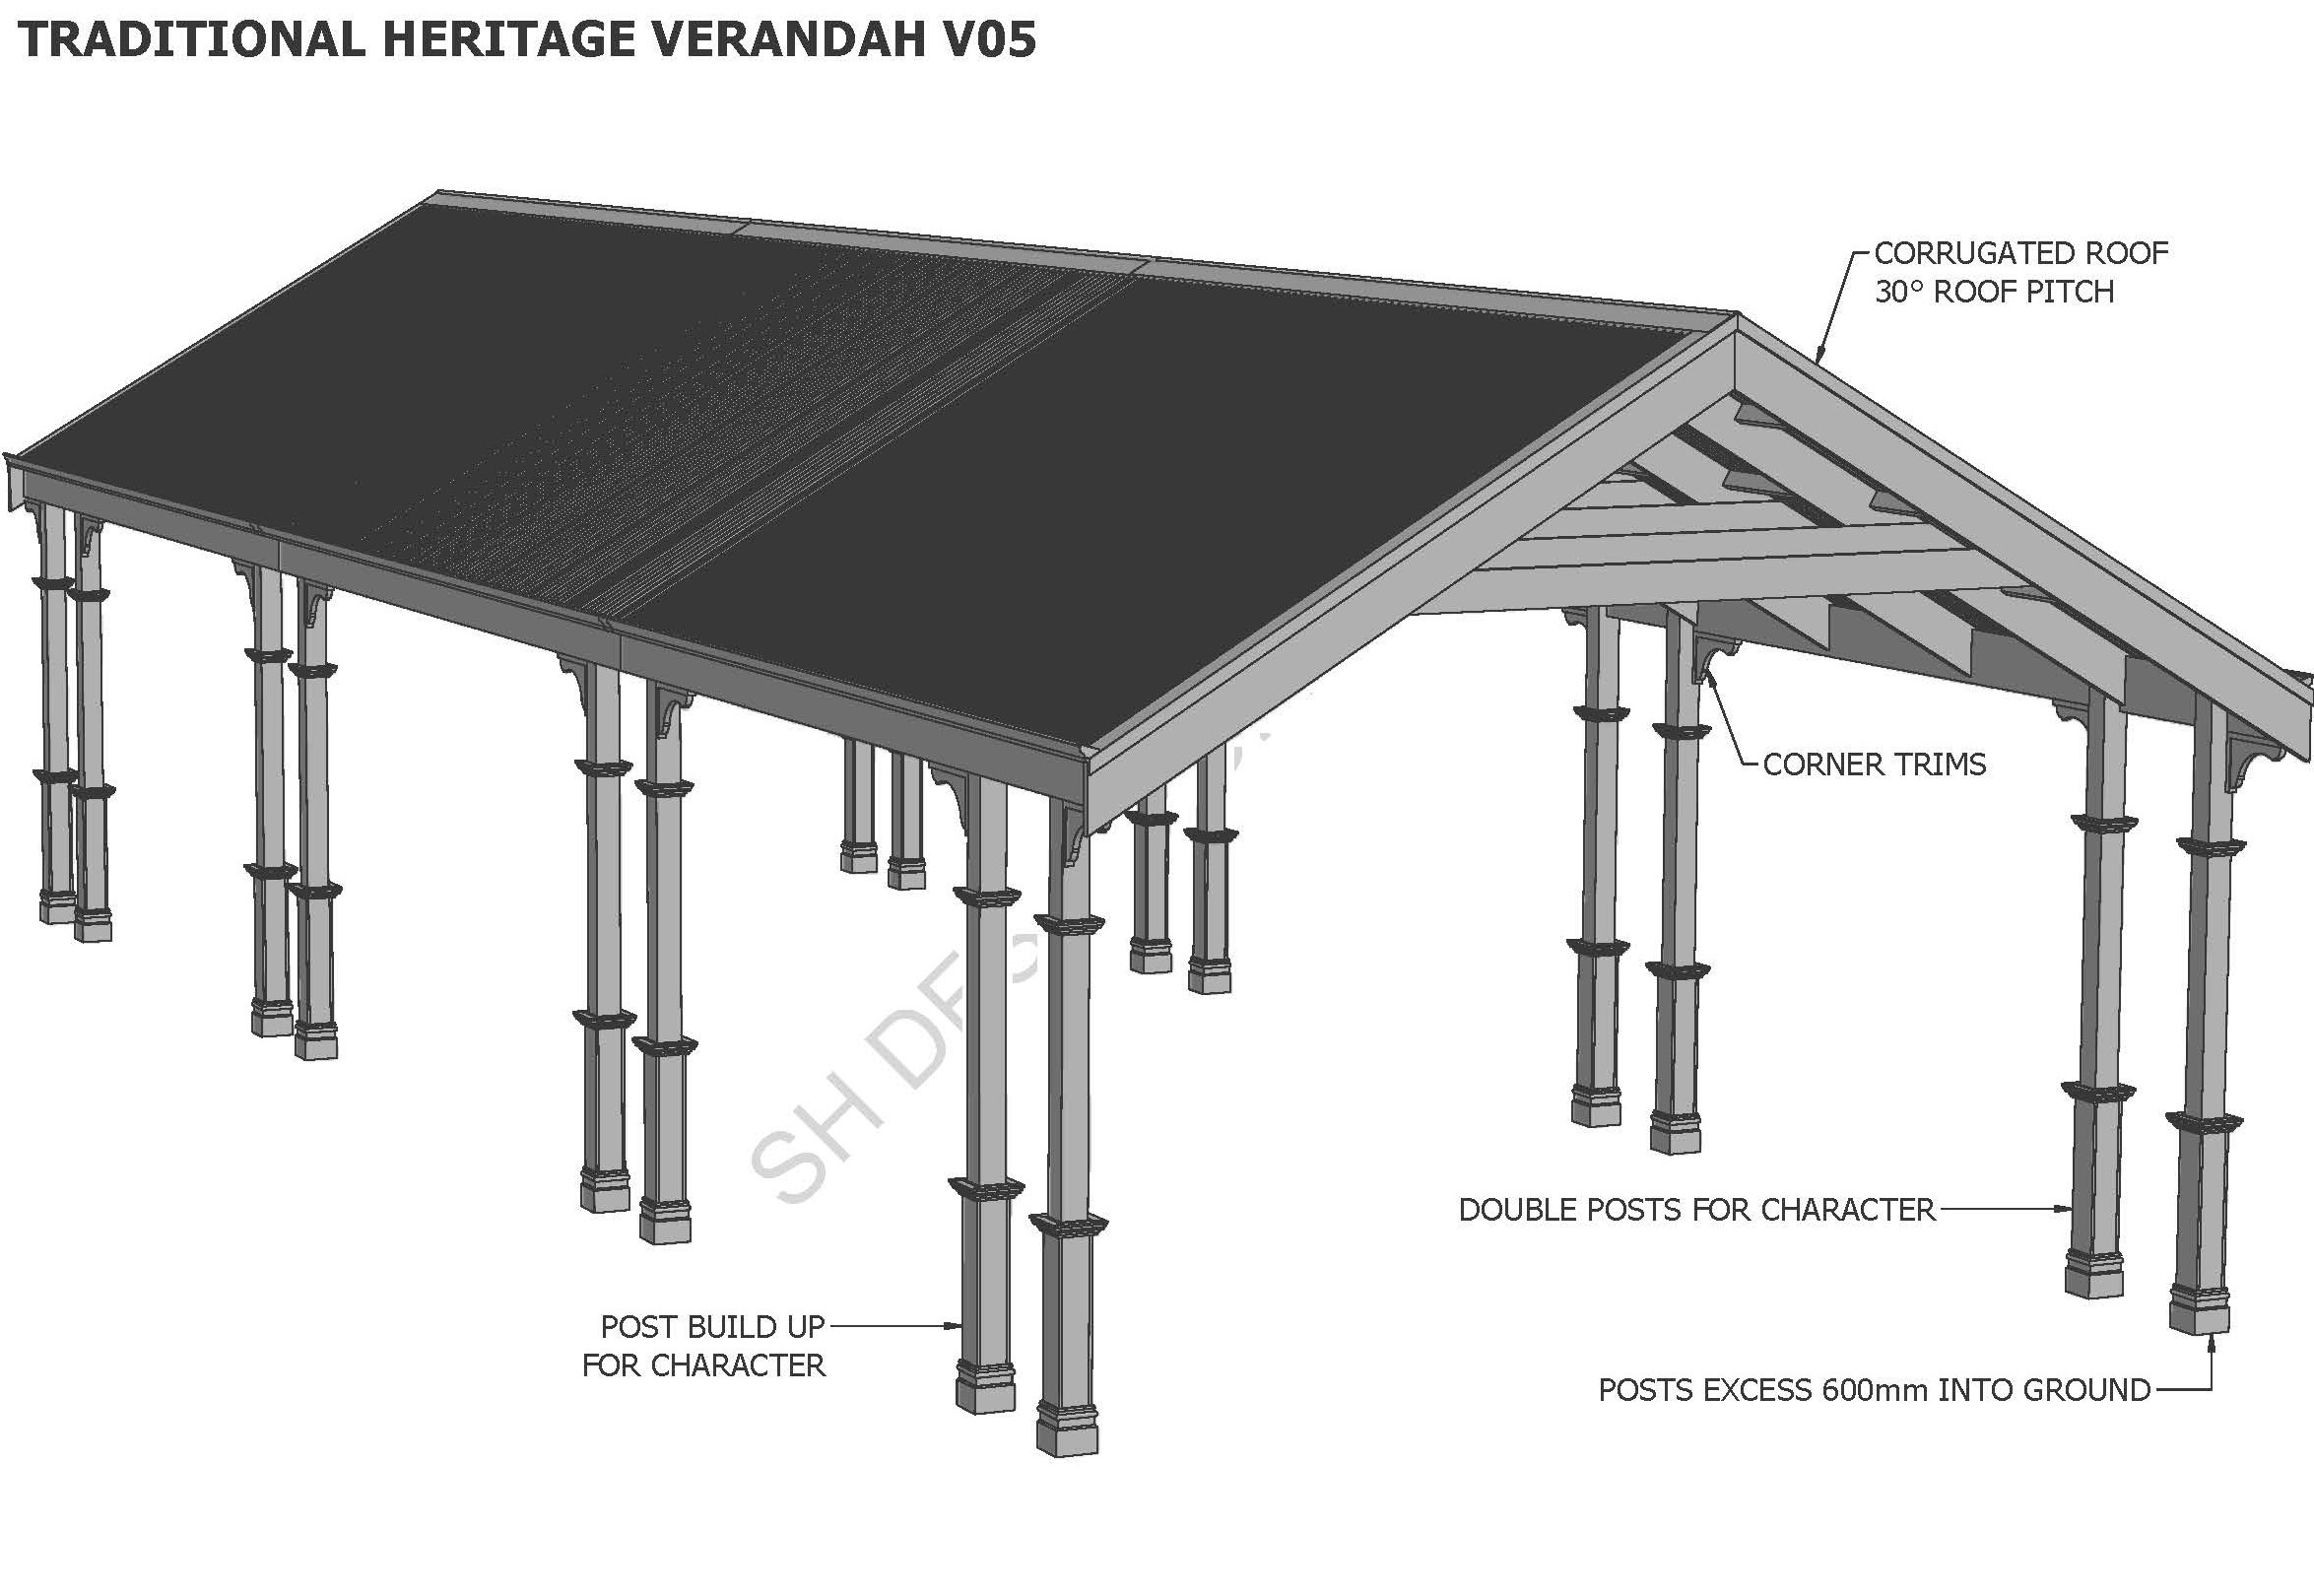 TRADITIONAL HERITAGE CARPORT / VERANDAH V05 (Building Plans ONLY)